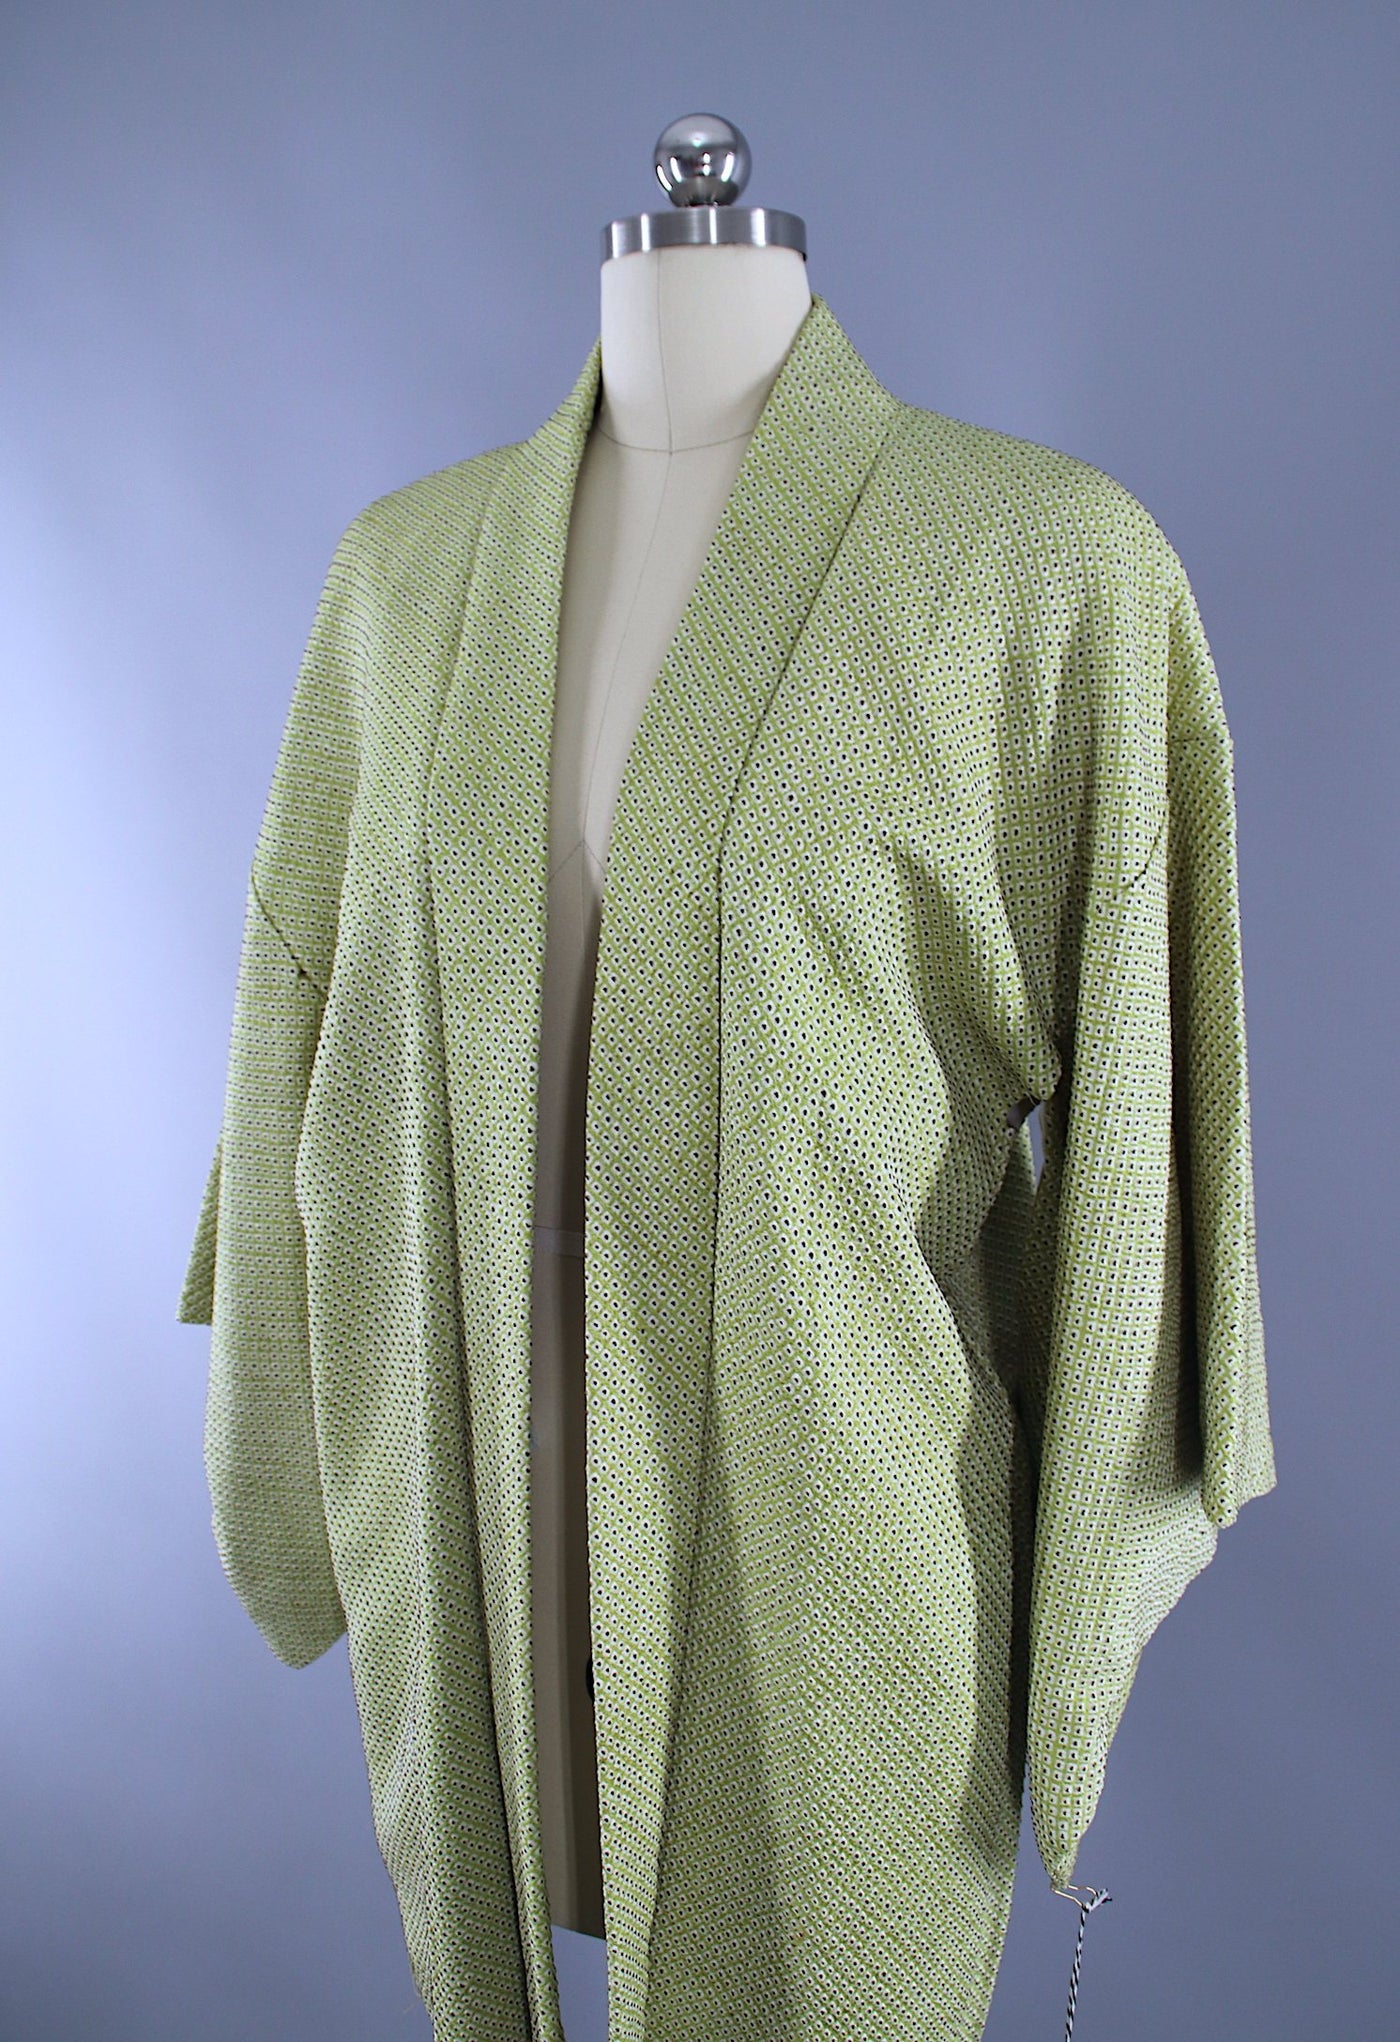 1950s Vintage Silk Haori Kimono Jacket Cardigan / Lime Green Shibori Haori - ThisBlueBird